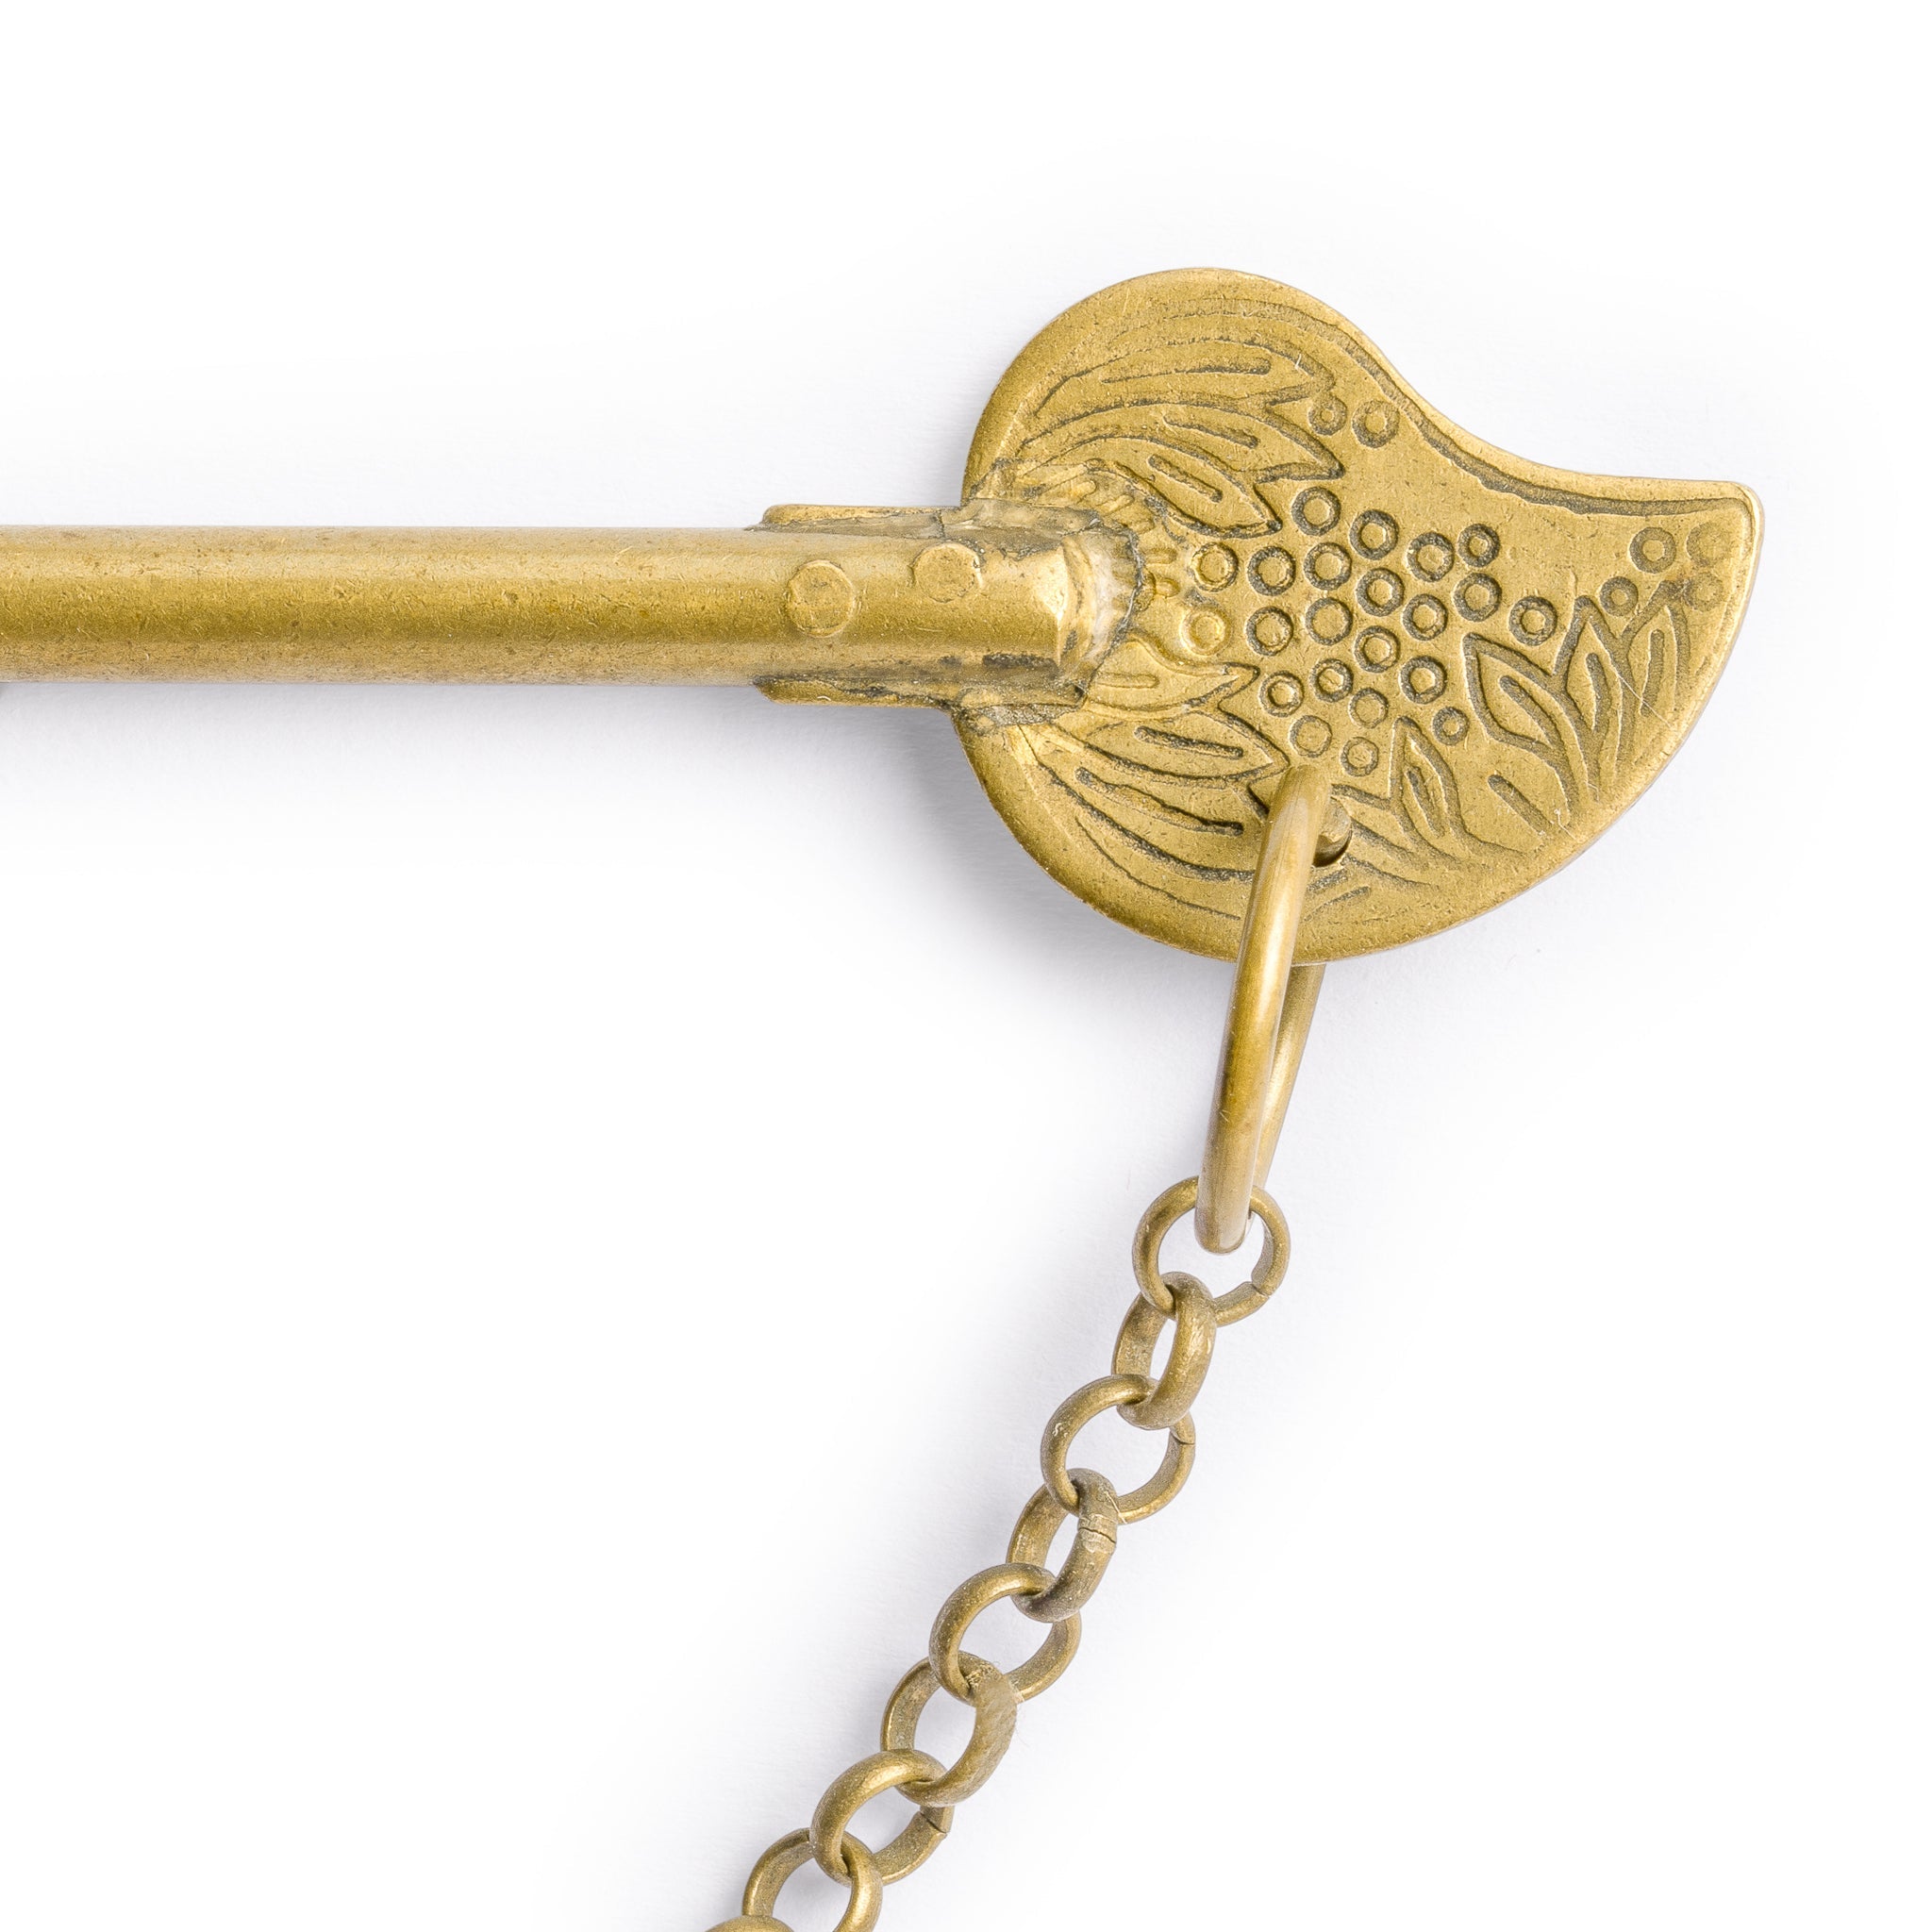 Bird Tail Brass Key Pin Hardware with Chain 3.5"-Chinese Brass Hardware